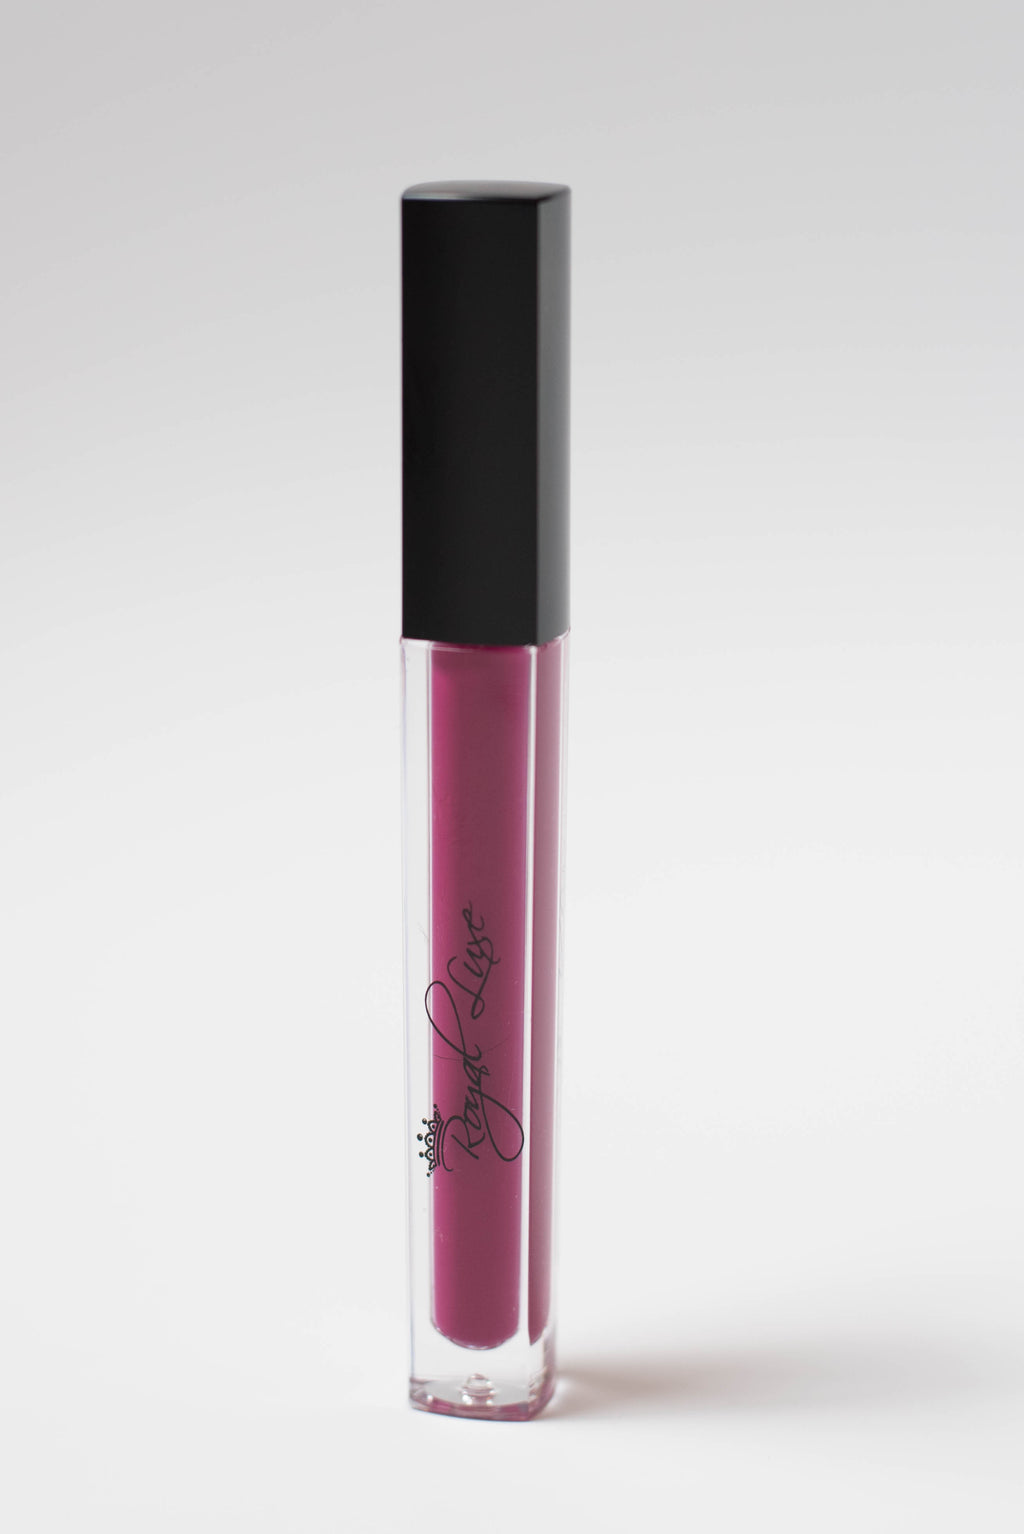 Lipstick - Royal Luxe Cosmetics